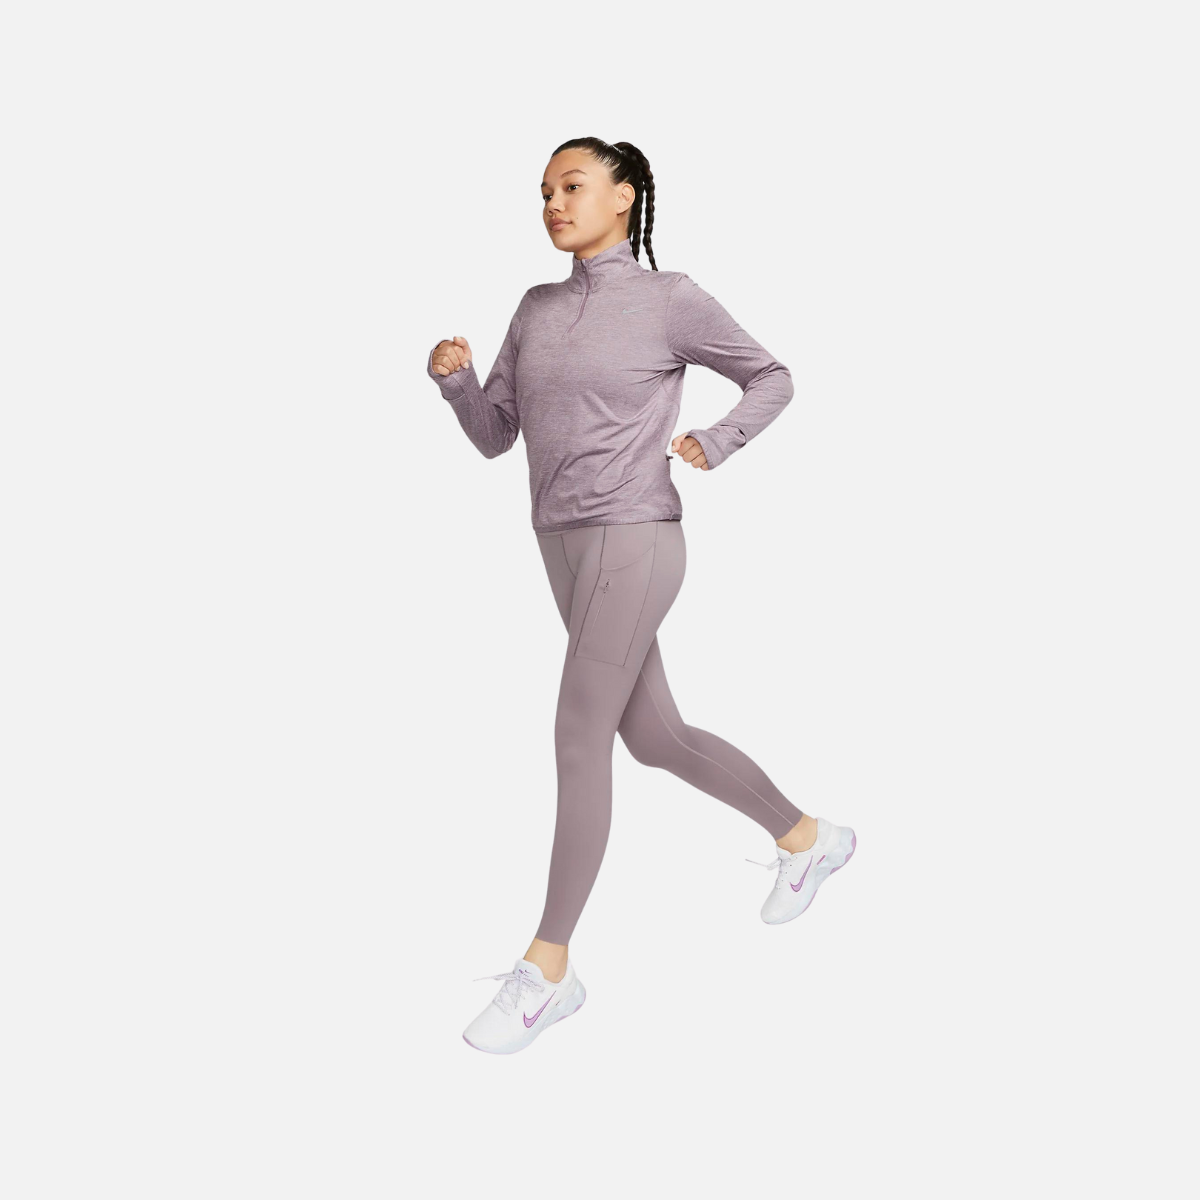 Nike Dri-FIT Swift UV Women's 1/4-Zip Running Top -Violet Dust/Pewter/Heather